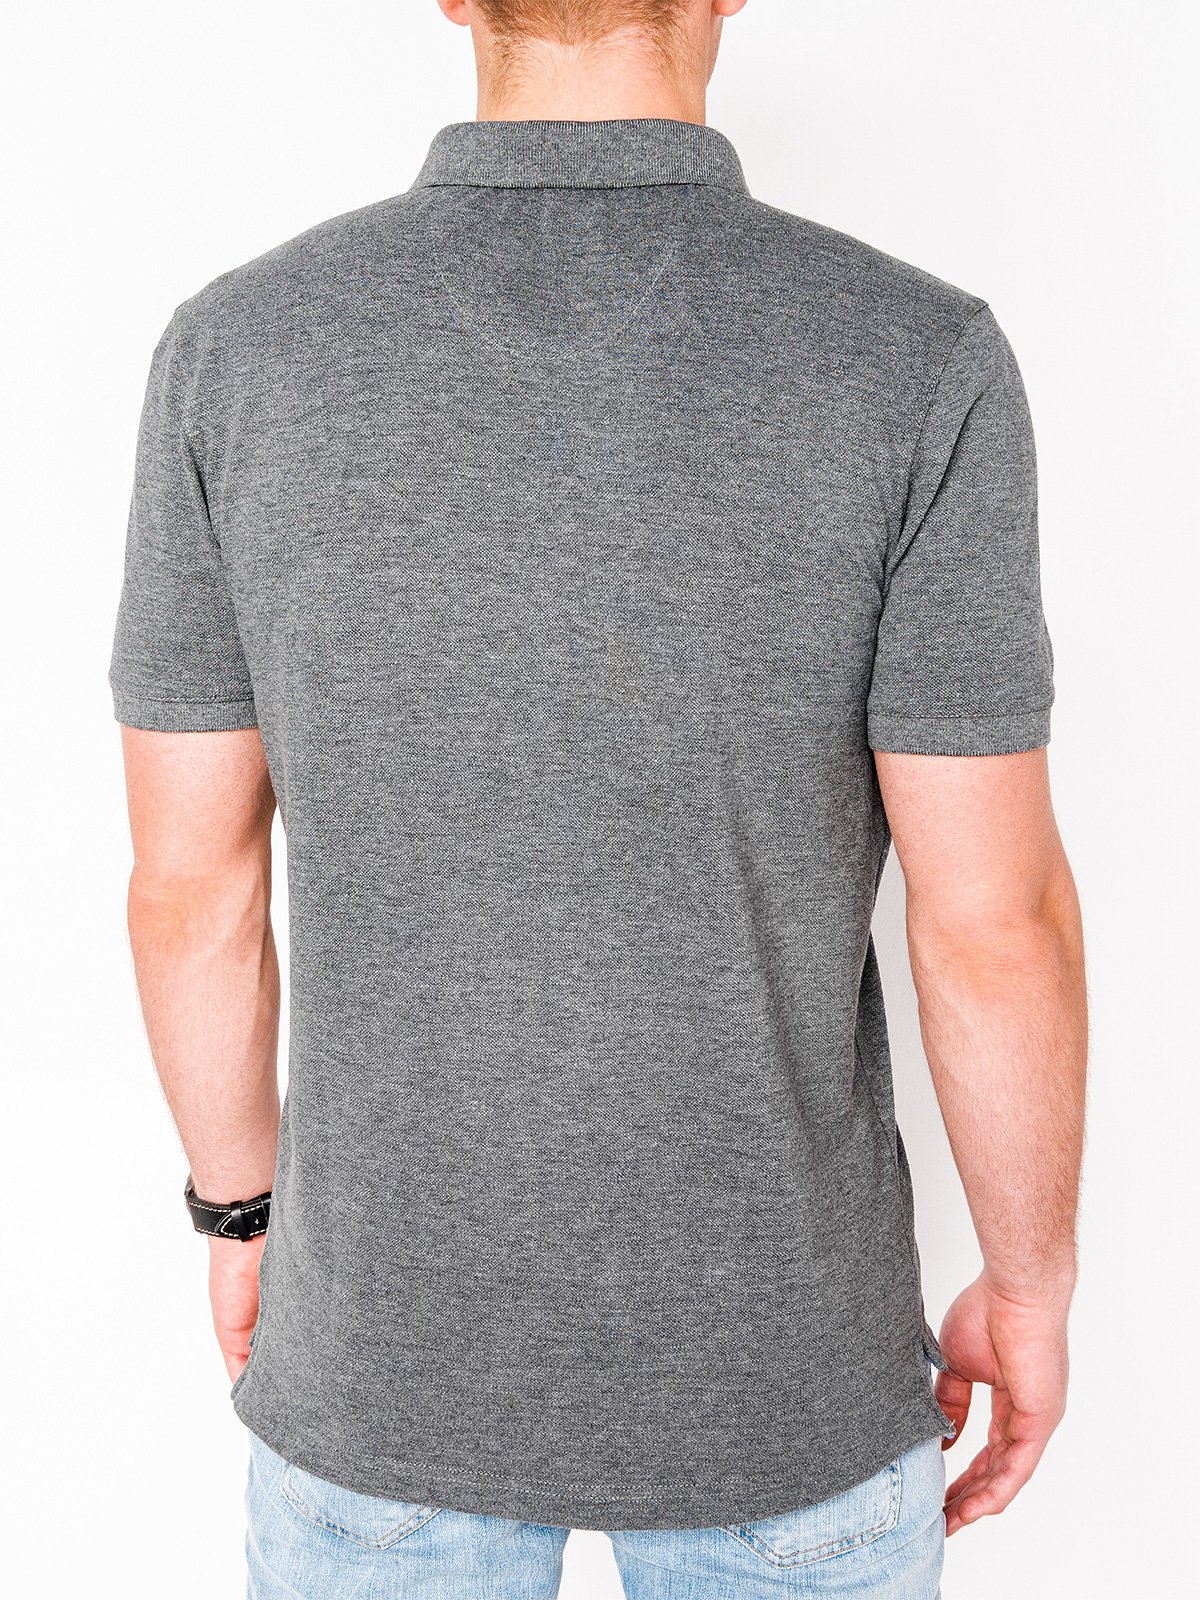 Men's plain polo shirt S837 - grey melange | MODONE wholesale ...